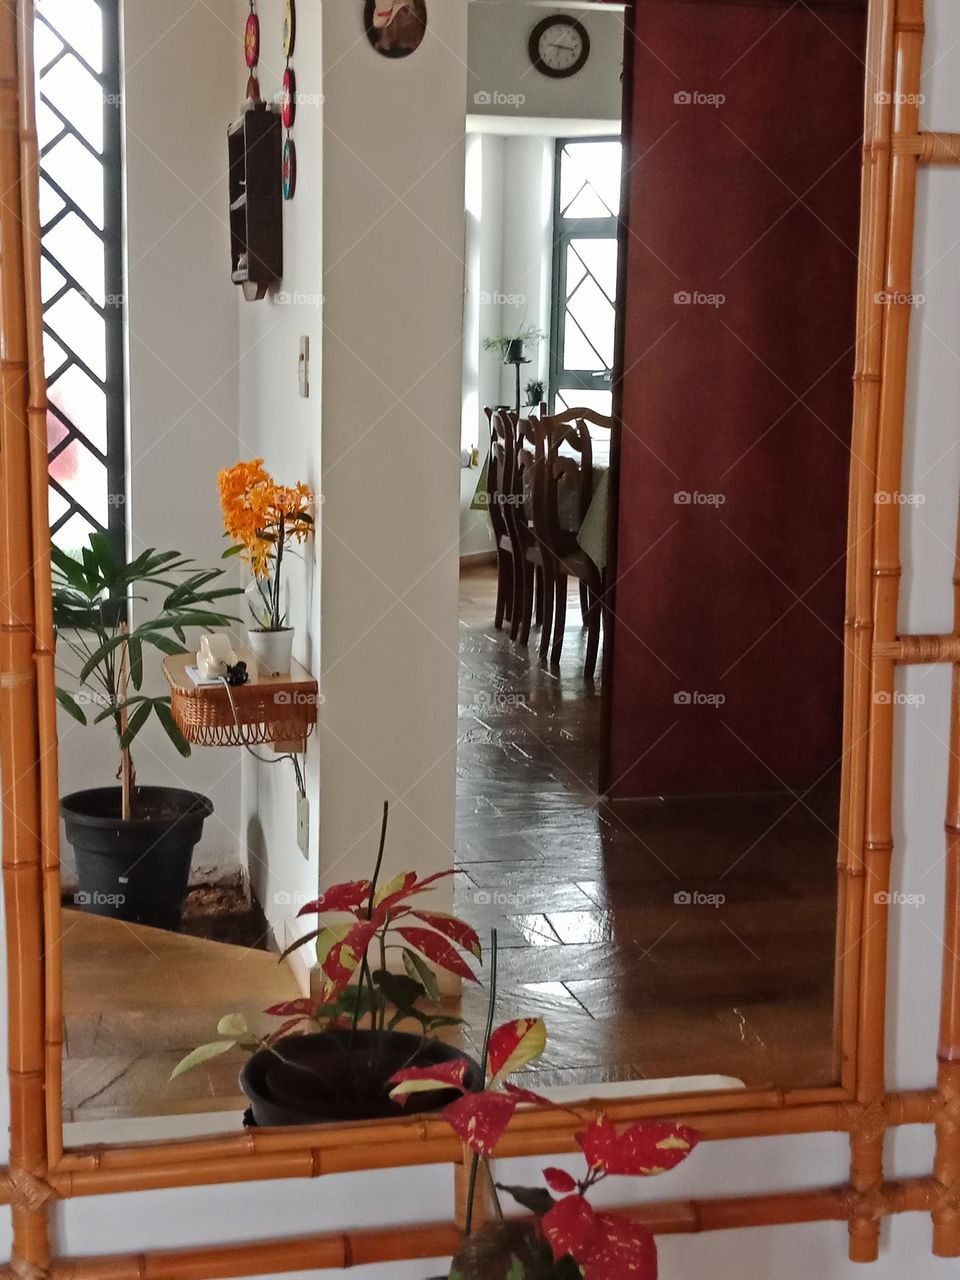 Entrance mirror showing plants, walls, flower, windows